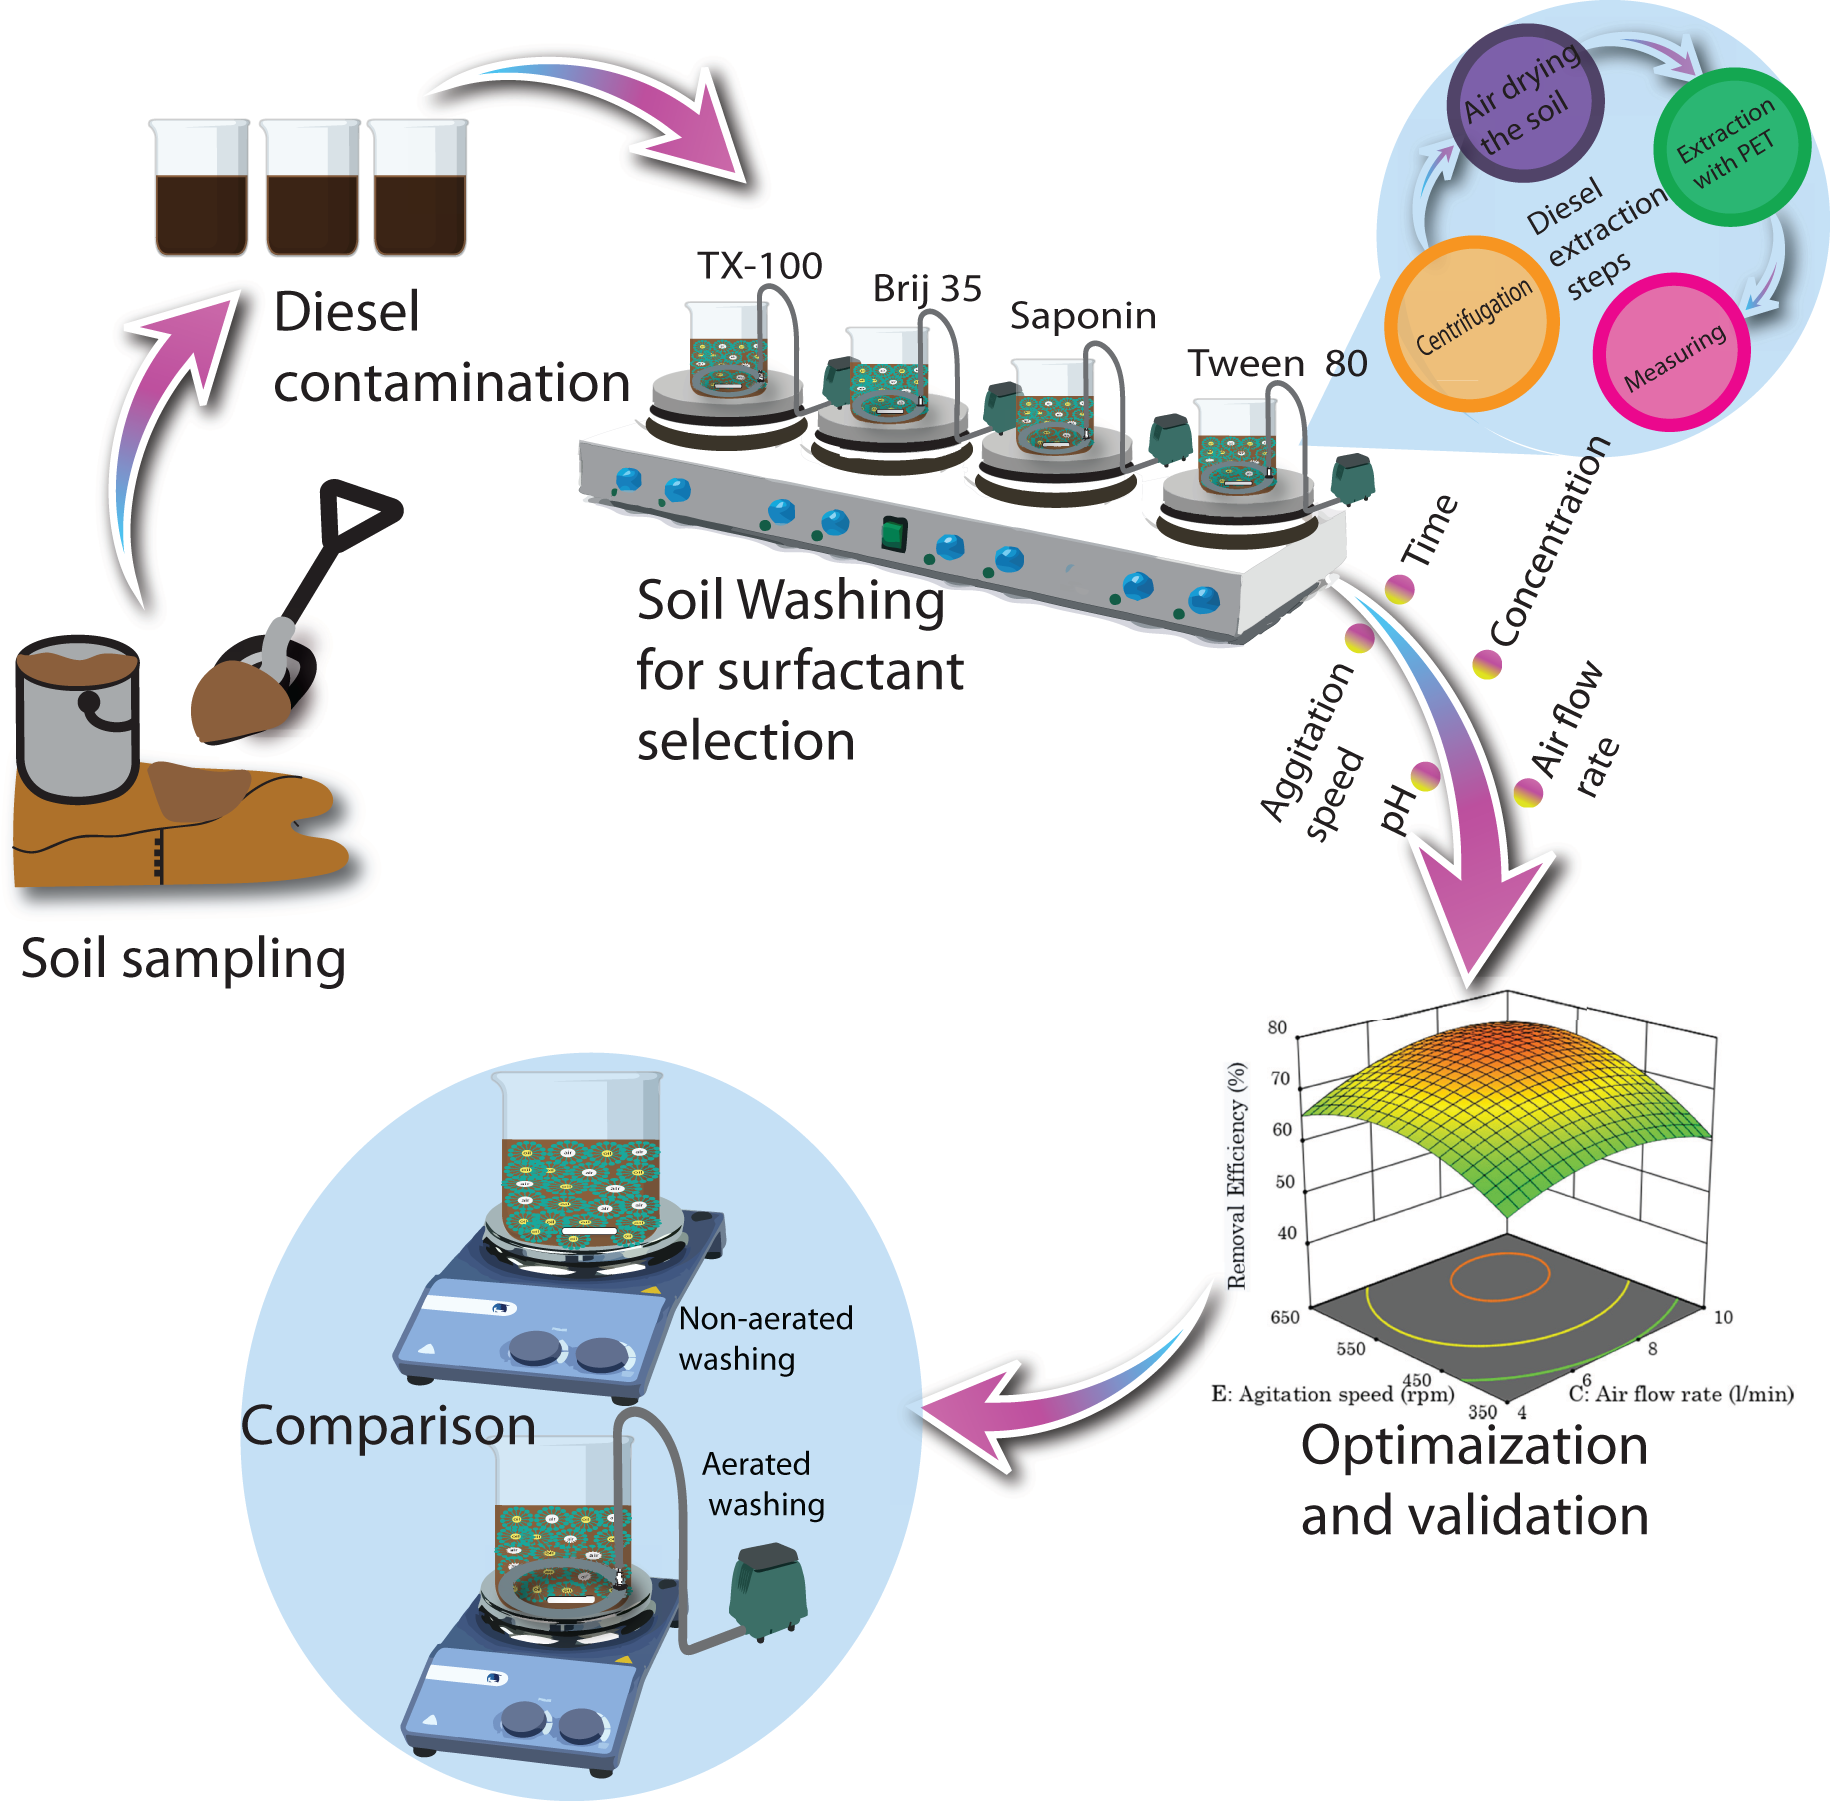 Optimization Of Aeration Enhanced Surfactant Soil Washing For Remediation Of Diesel Contaminated Soils Using Response Surface Methodology Peerj